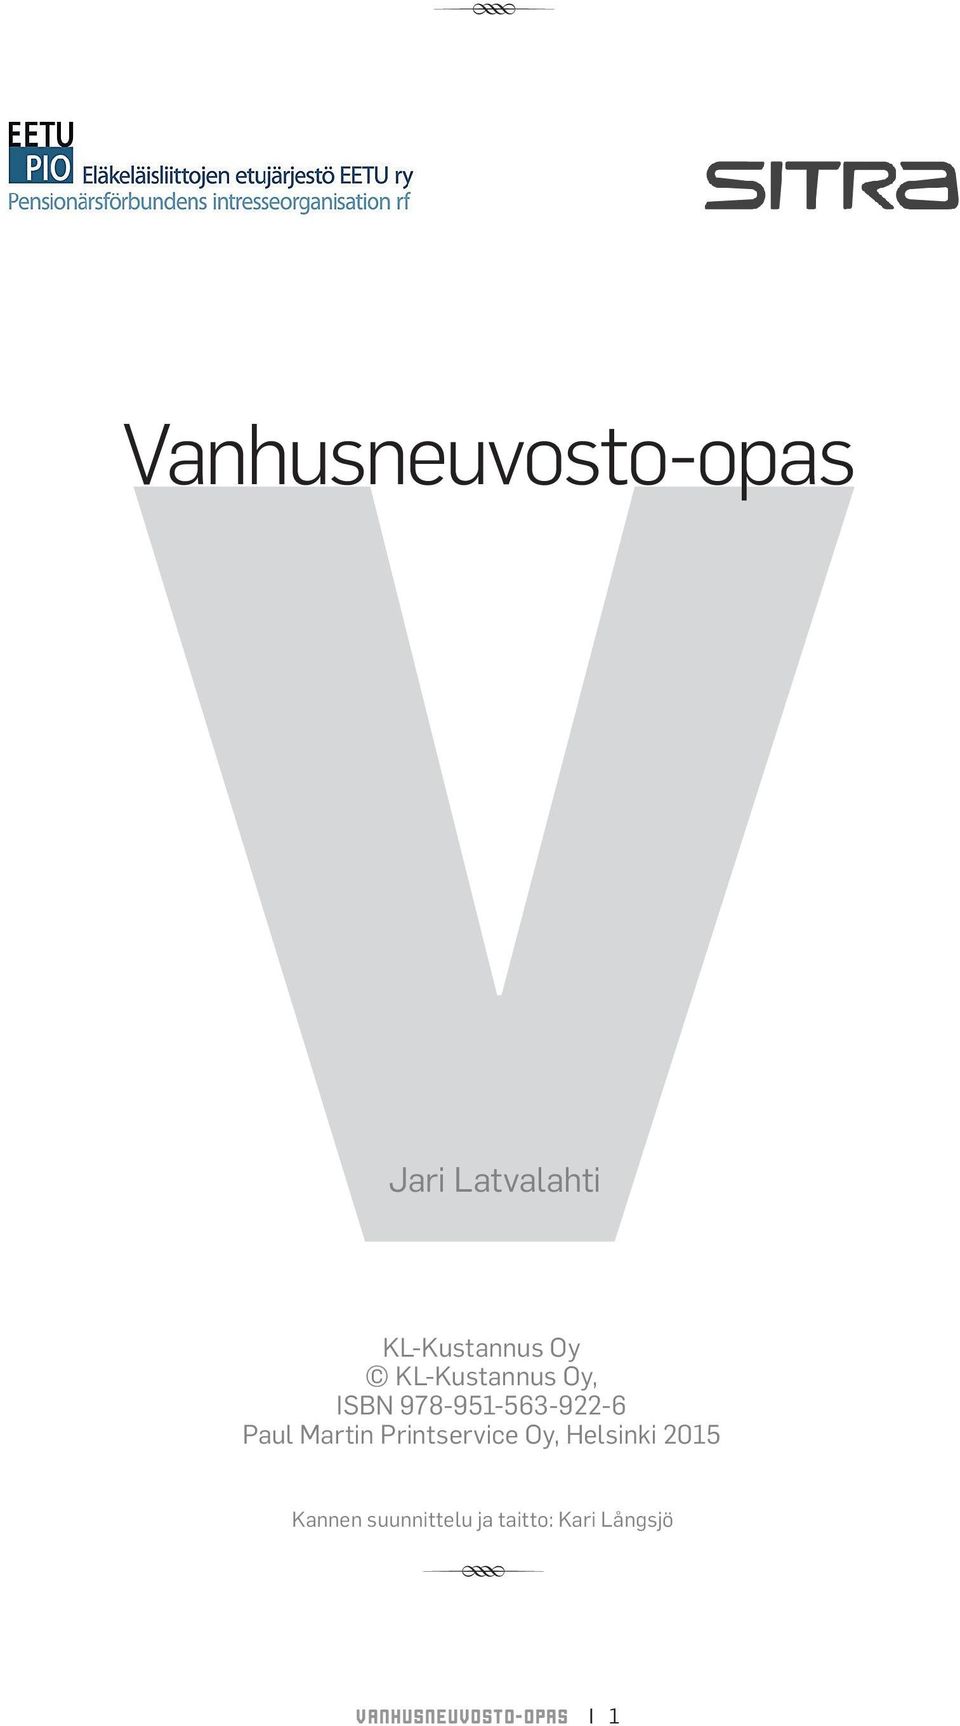 Martin Printservice Oy, Helsinki 2015 Kannen